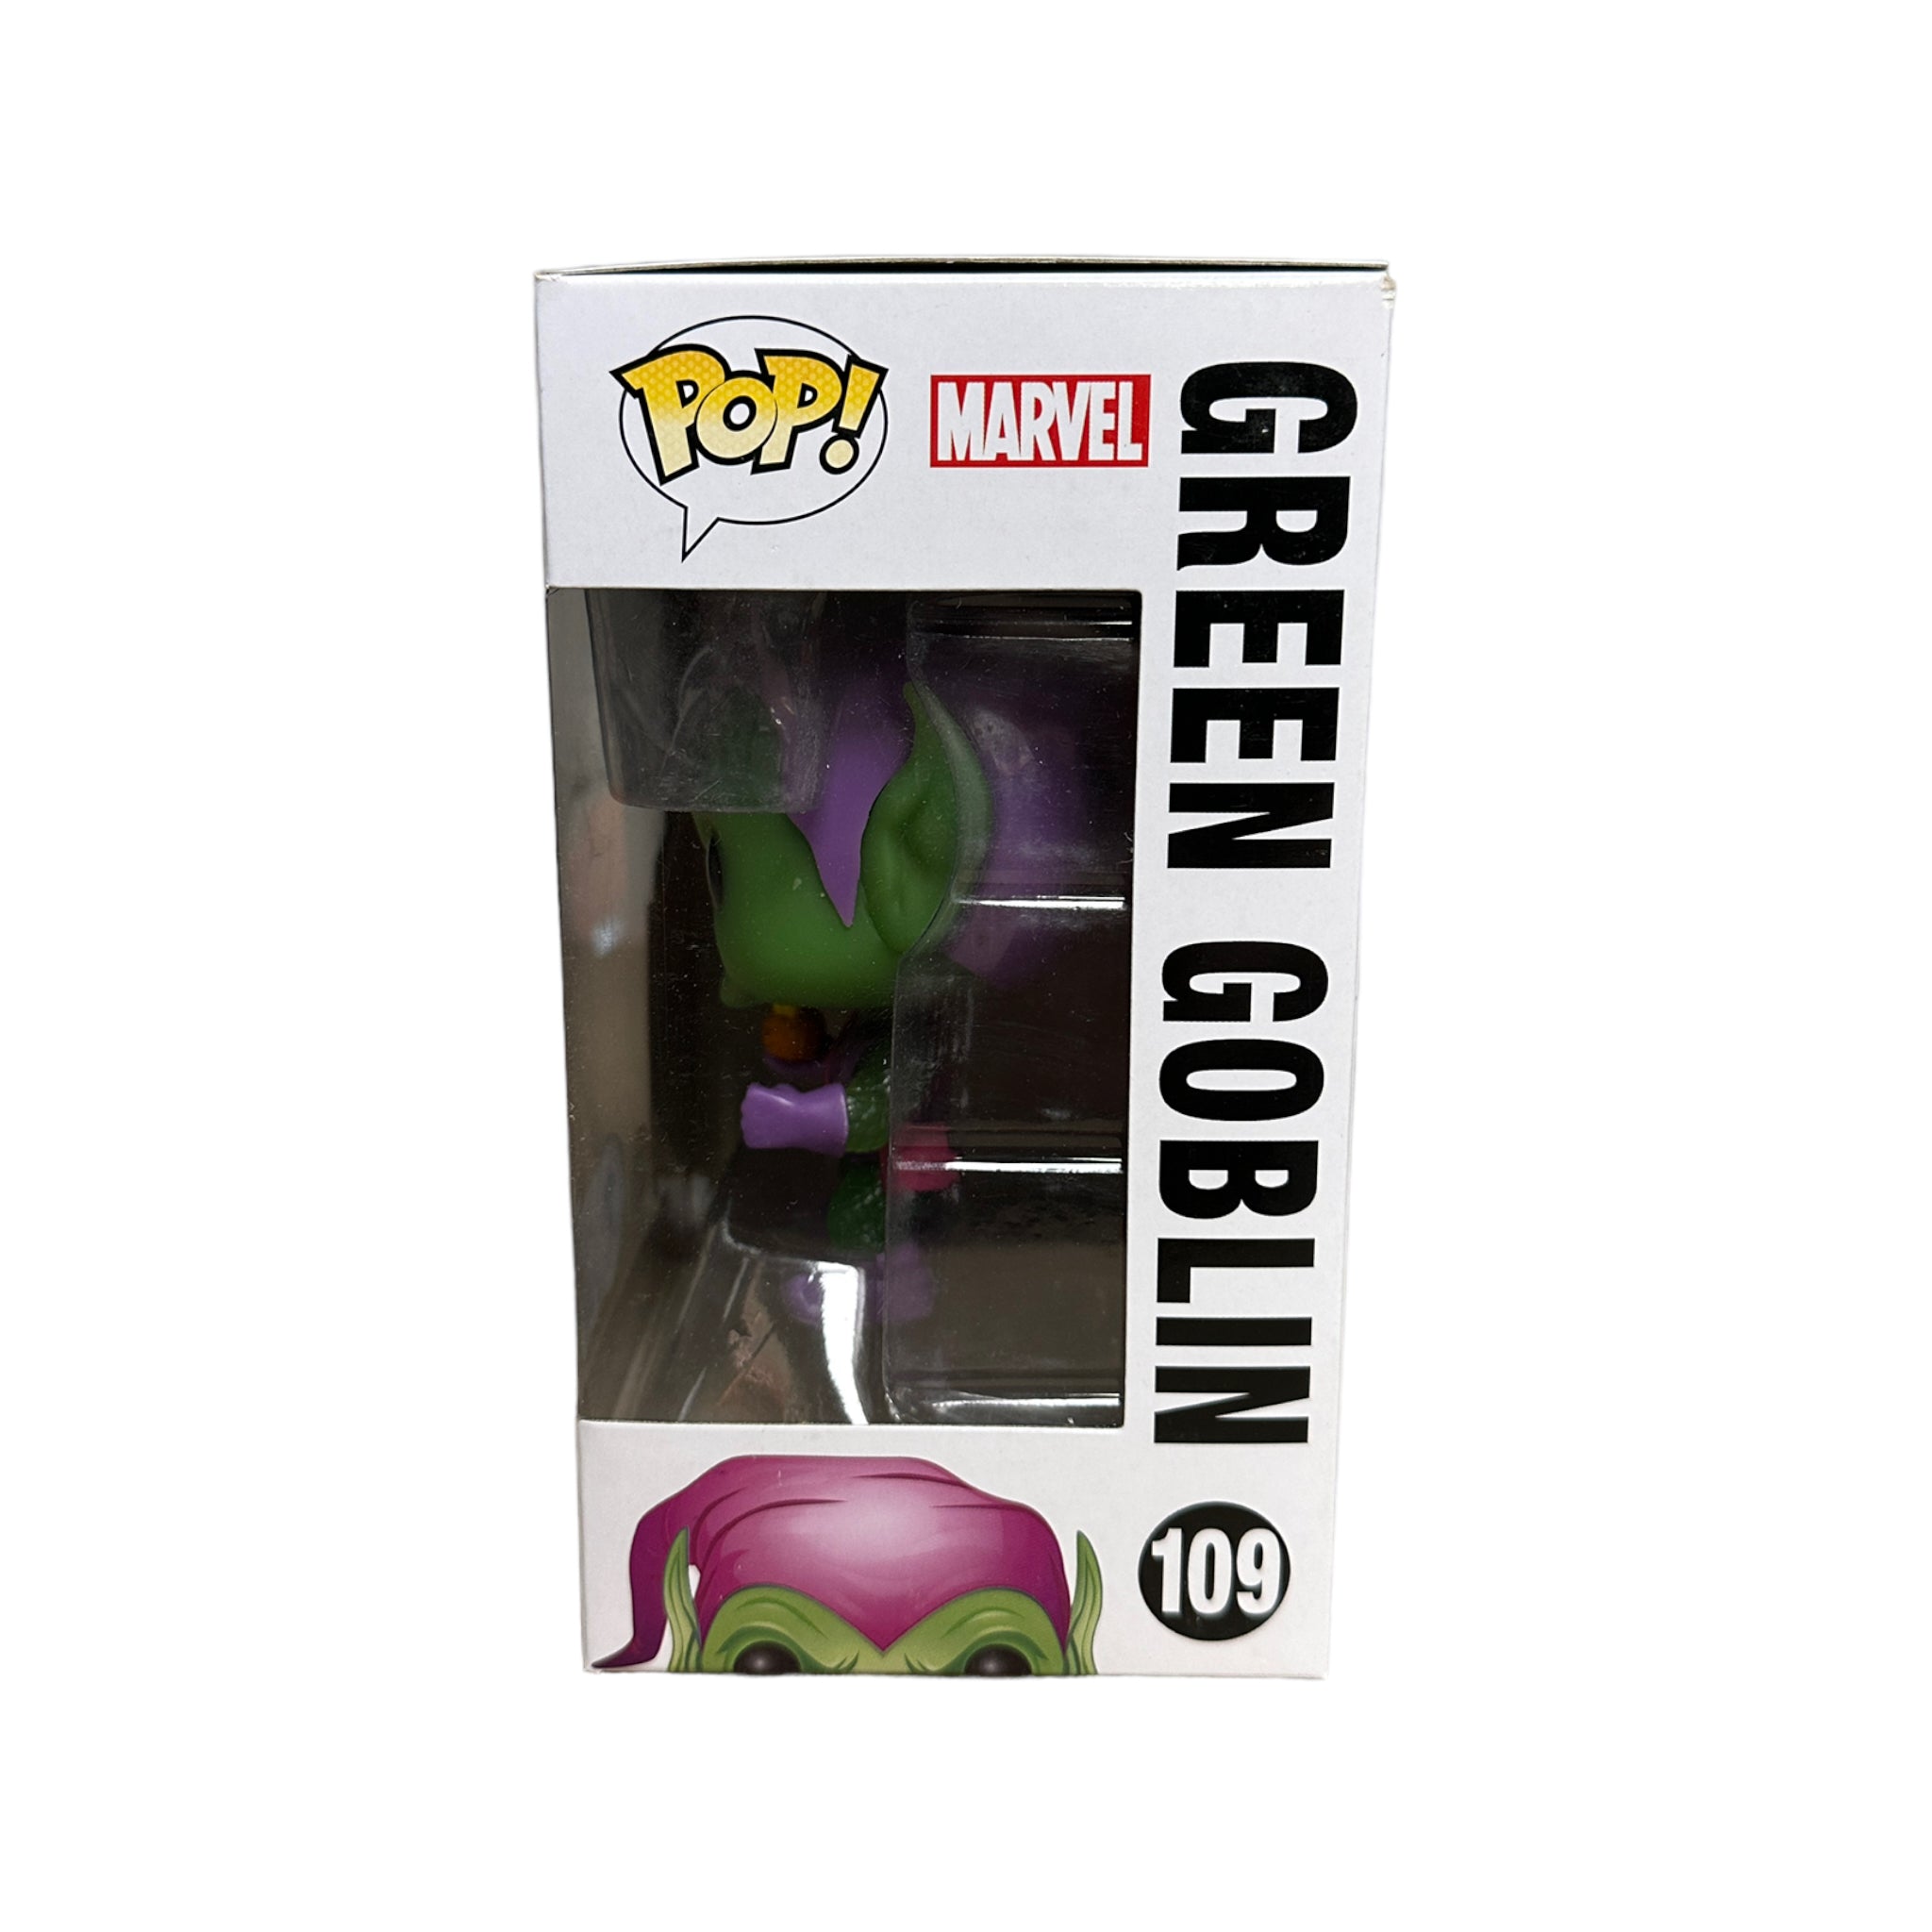 Green Goblin #109 (Glows in the Dark) Funko Pop! - Marvel - ECCC 2016 Exclusive LE300 Pcs - Condition 7/10